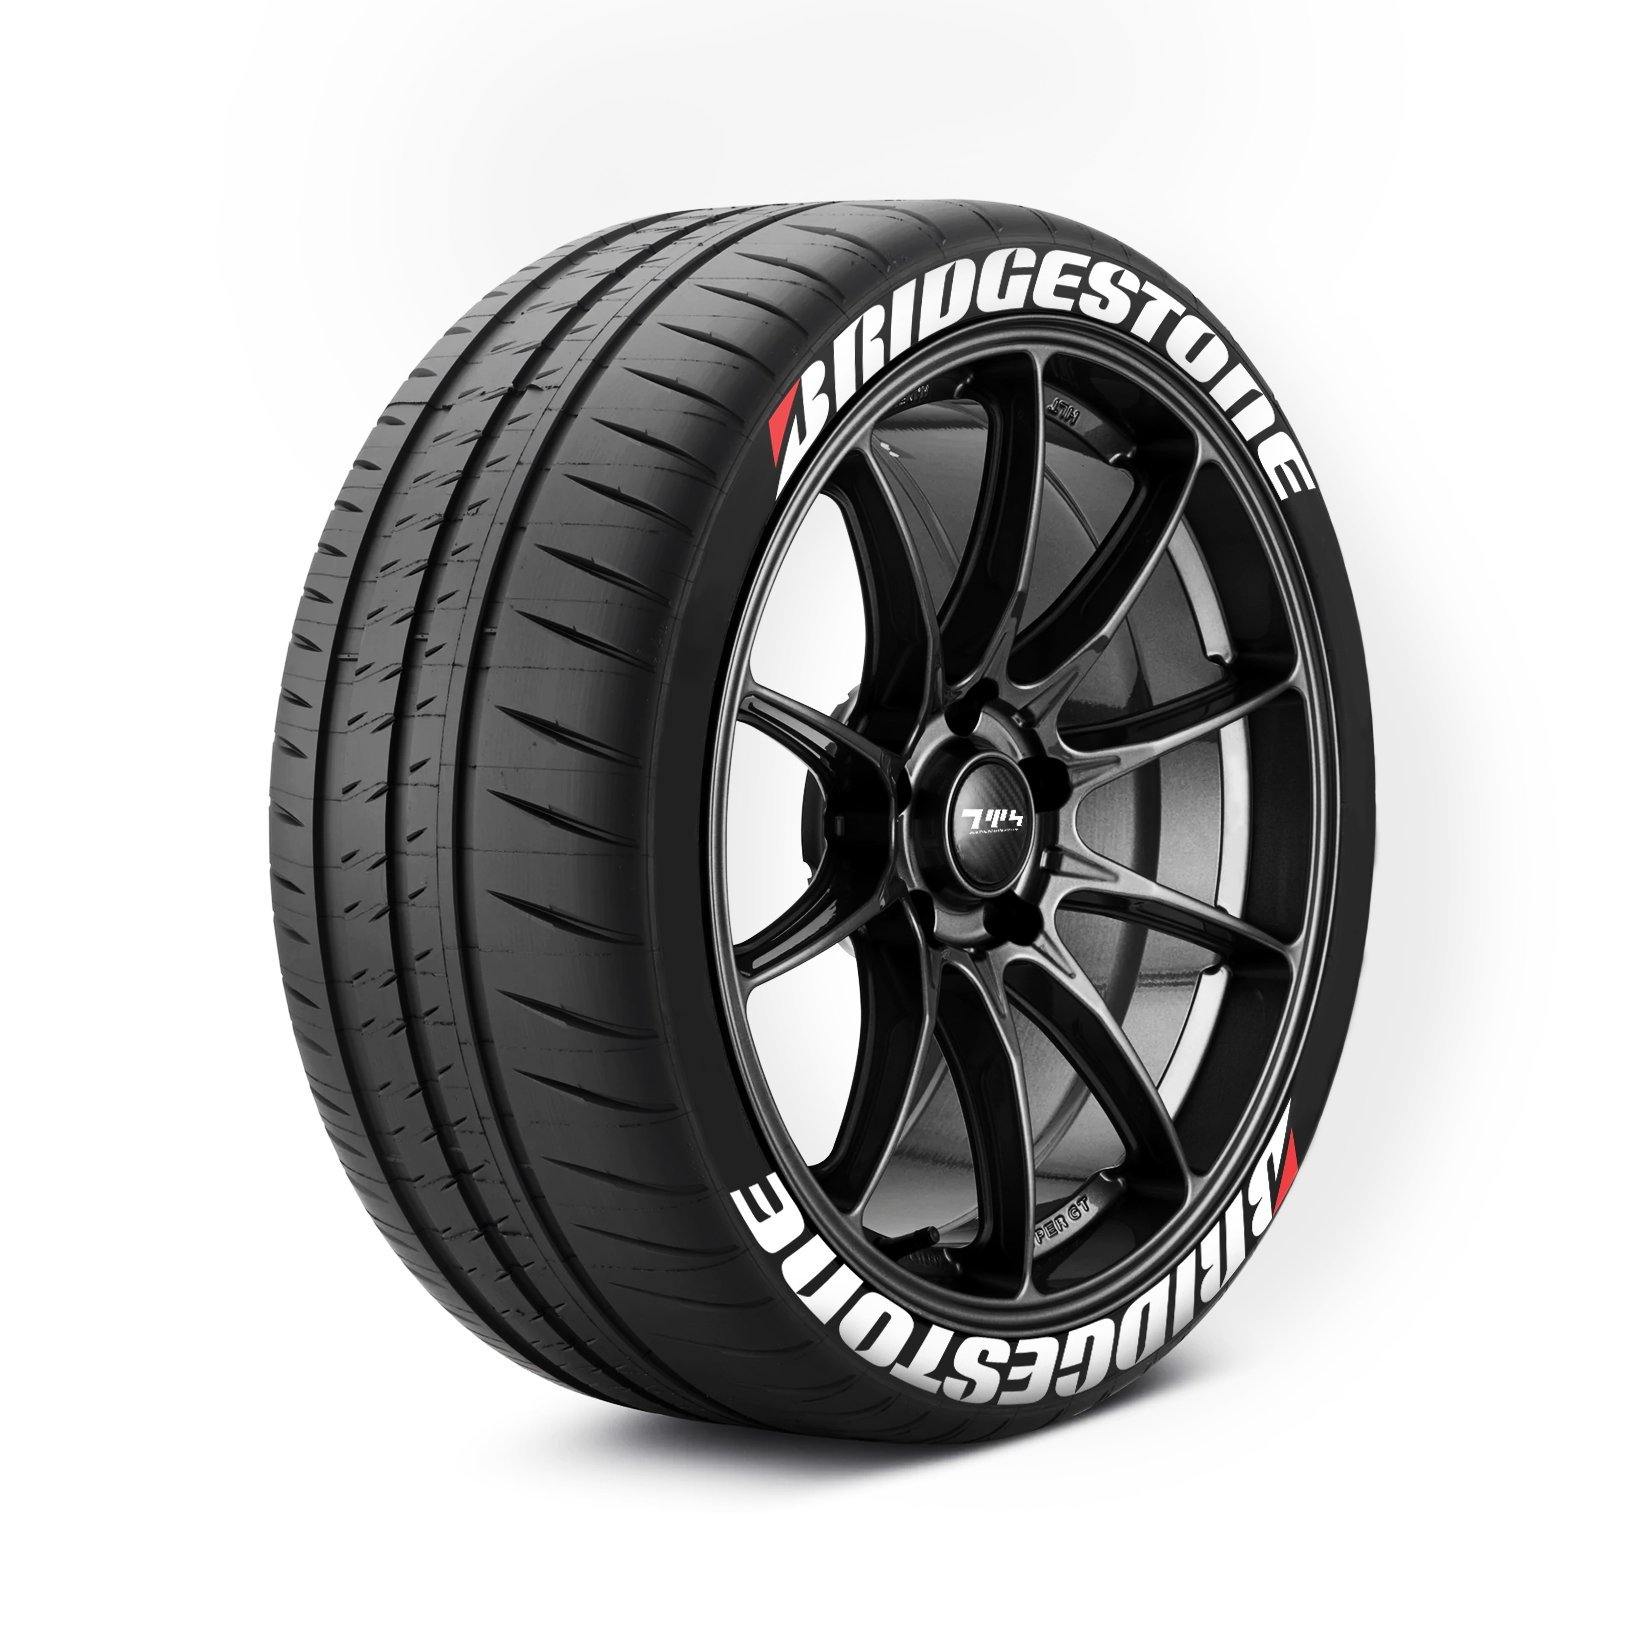 bridgestone tires logo